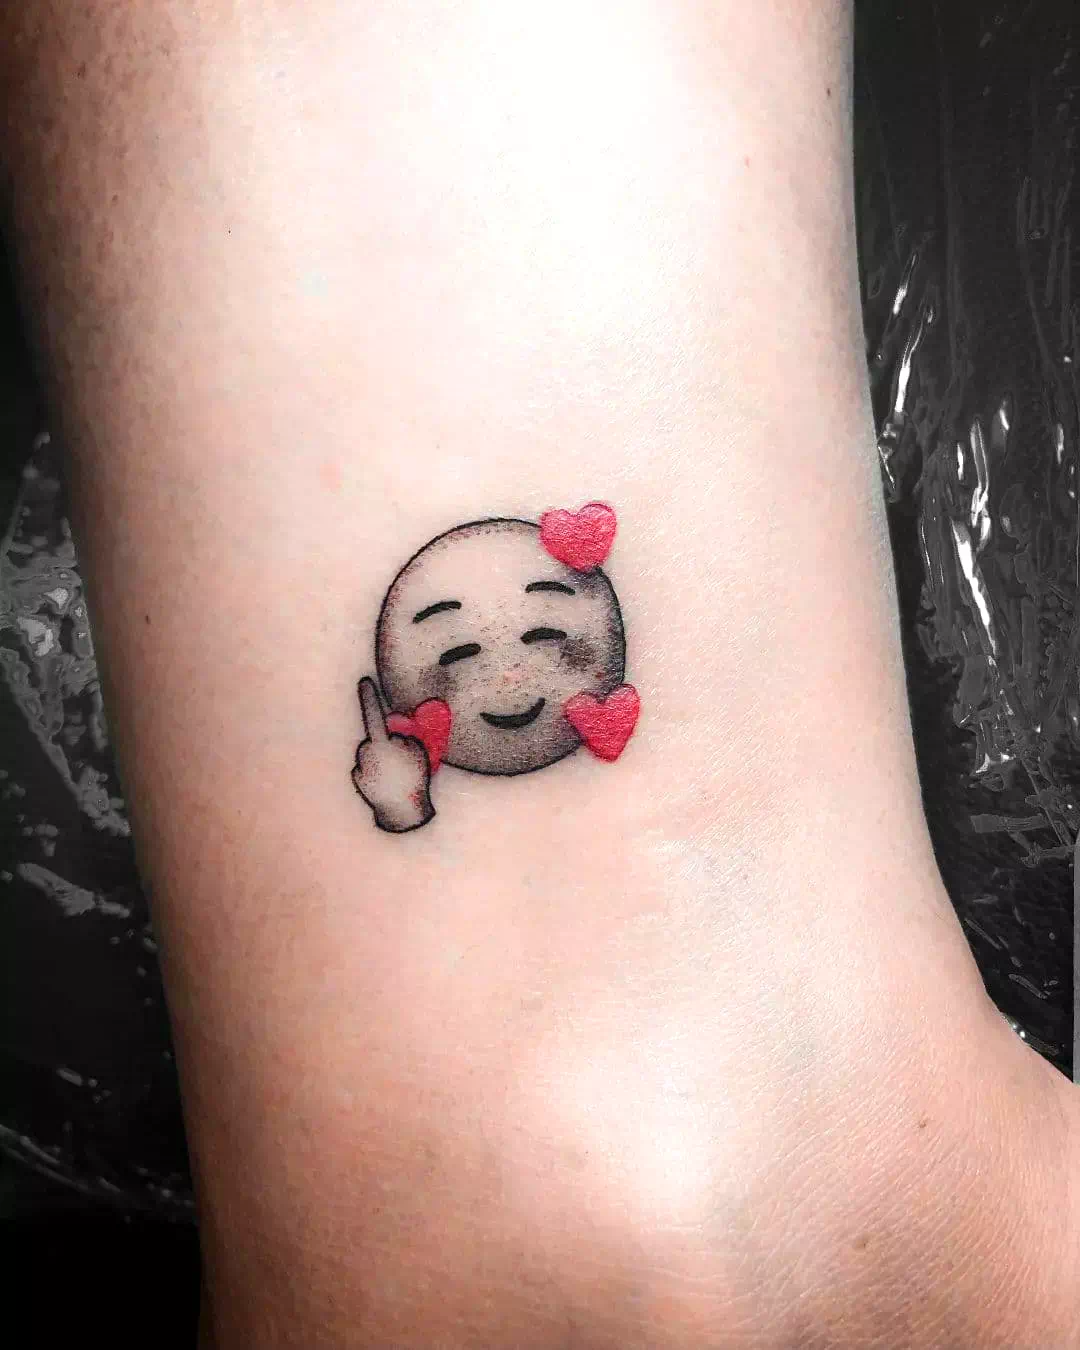 Divertido tatuaje de cara sonriente